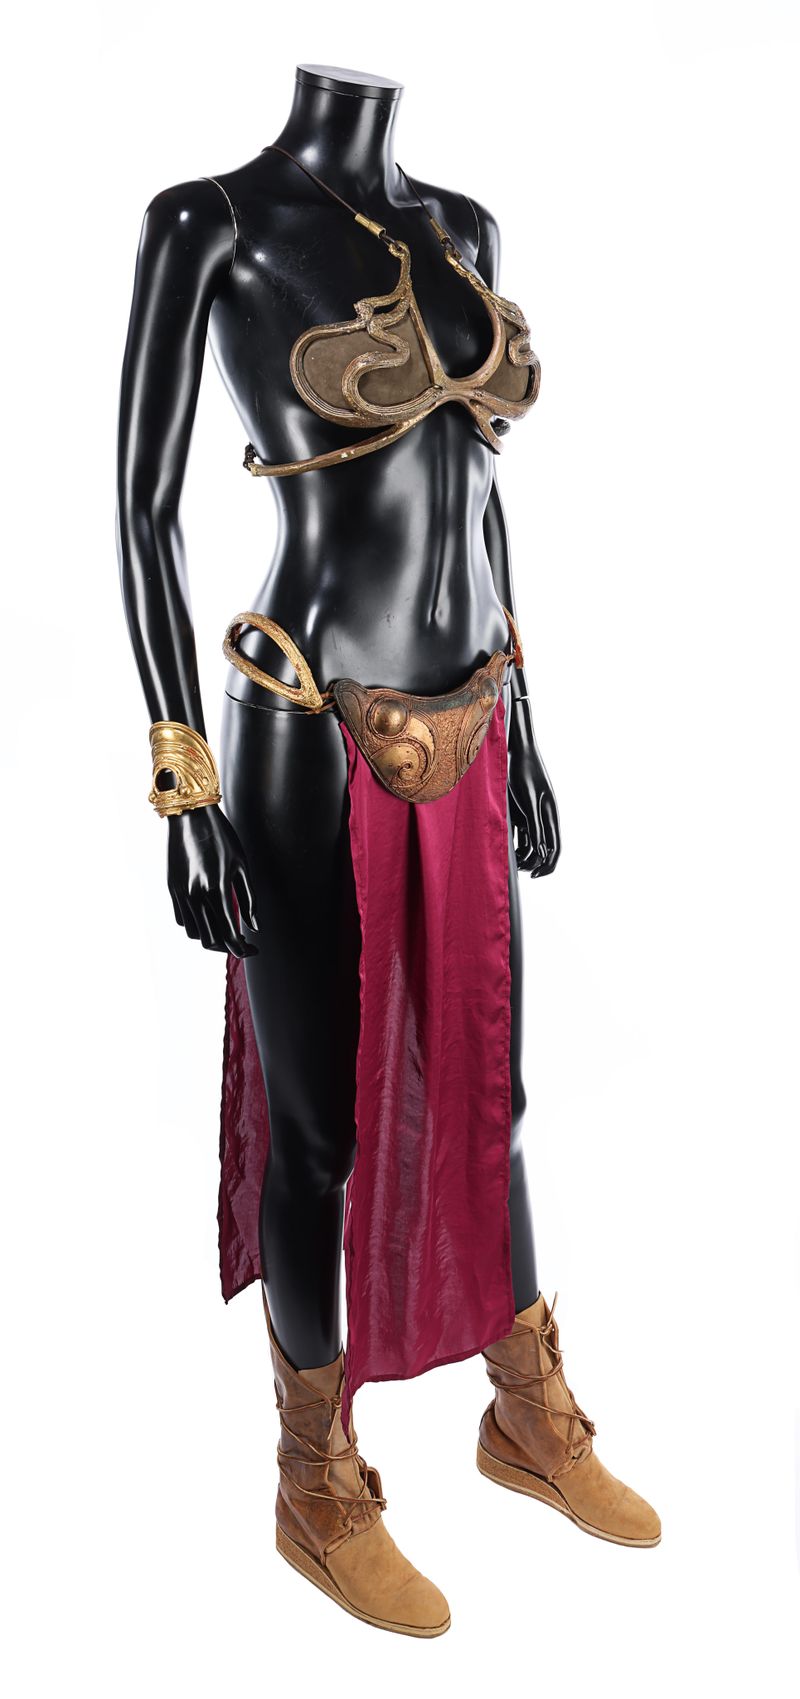 Princess Leia's Slave Costume